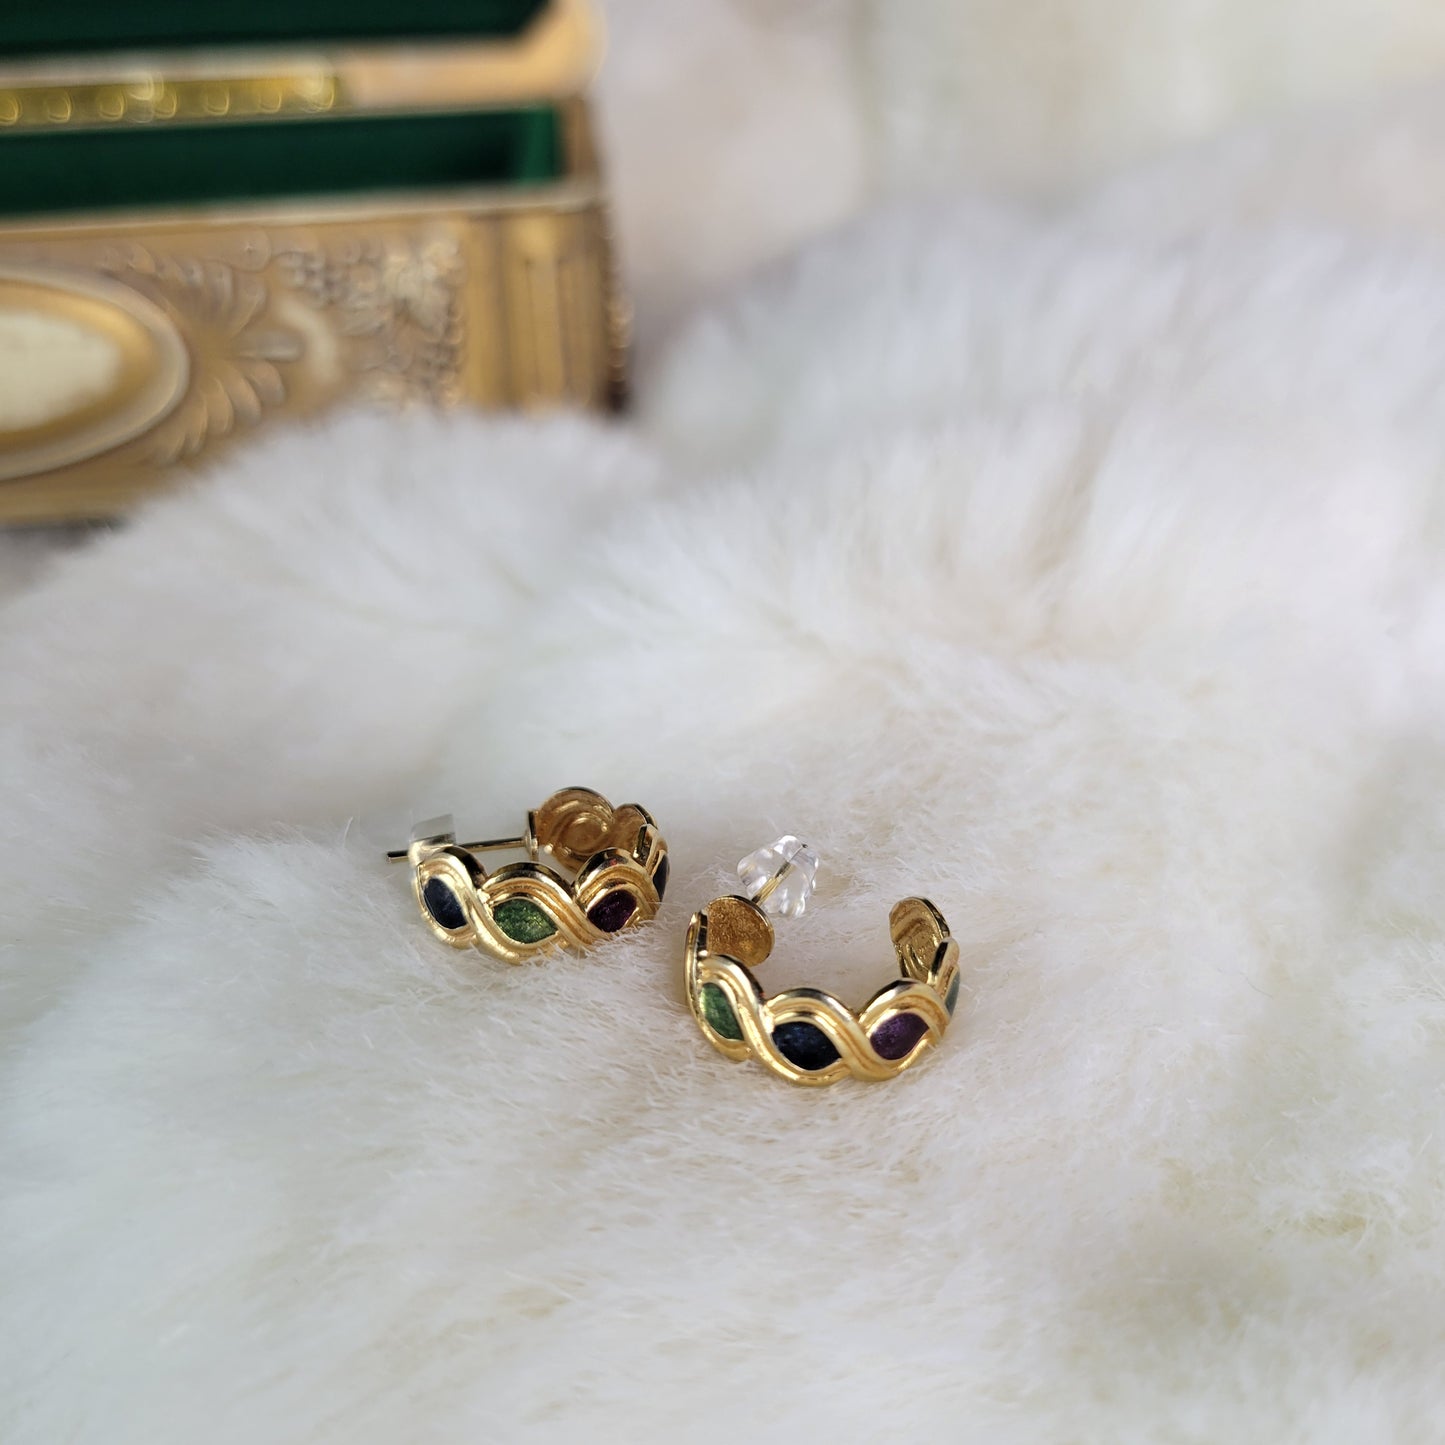 Small Gold Braided Vintage Hoop Earrings with Enamel Filled Details - Pierced